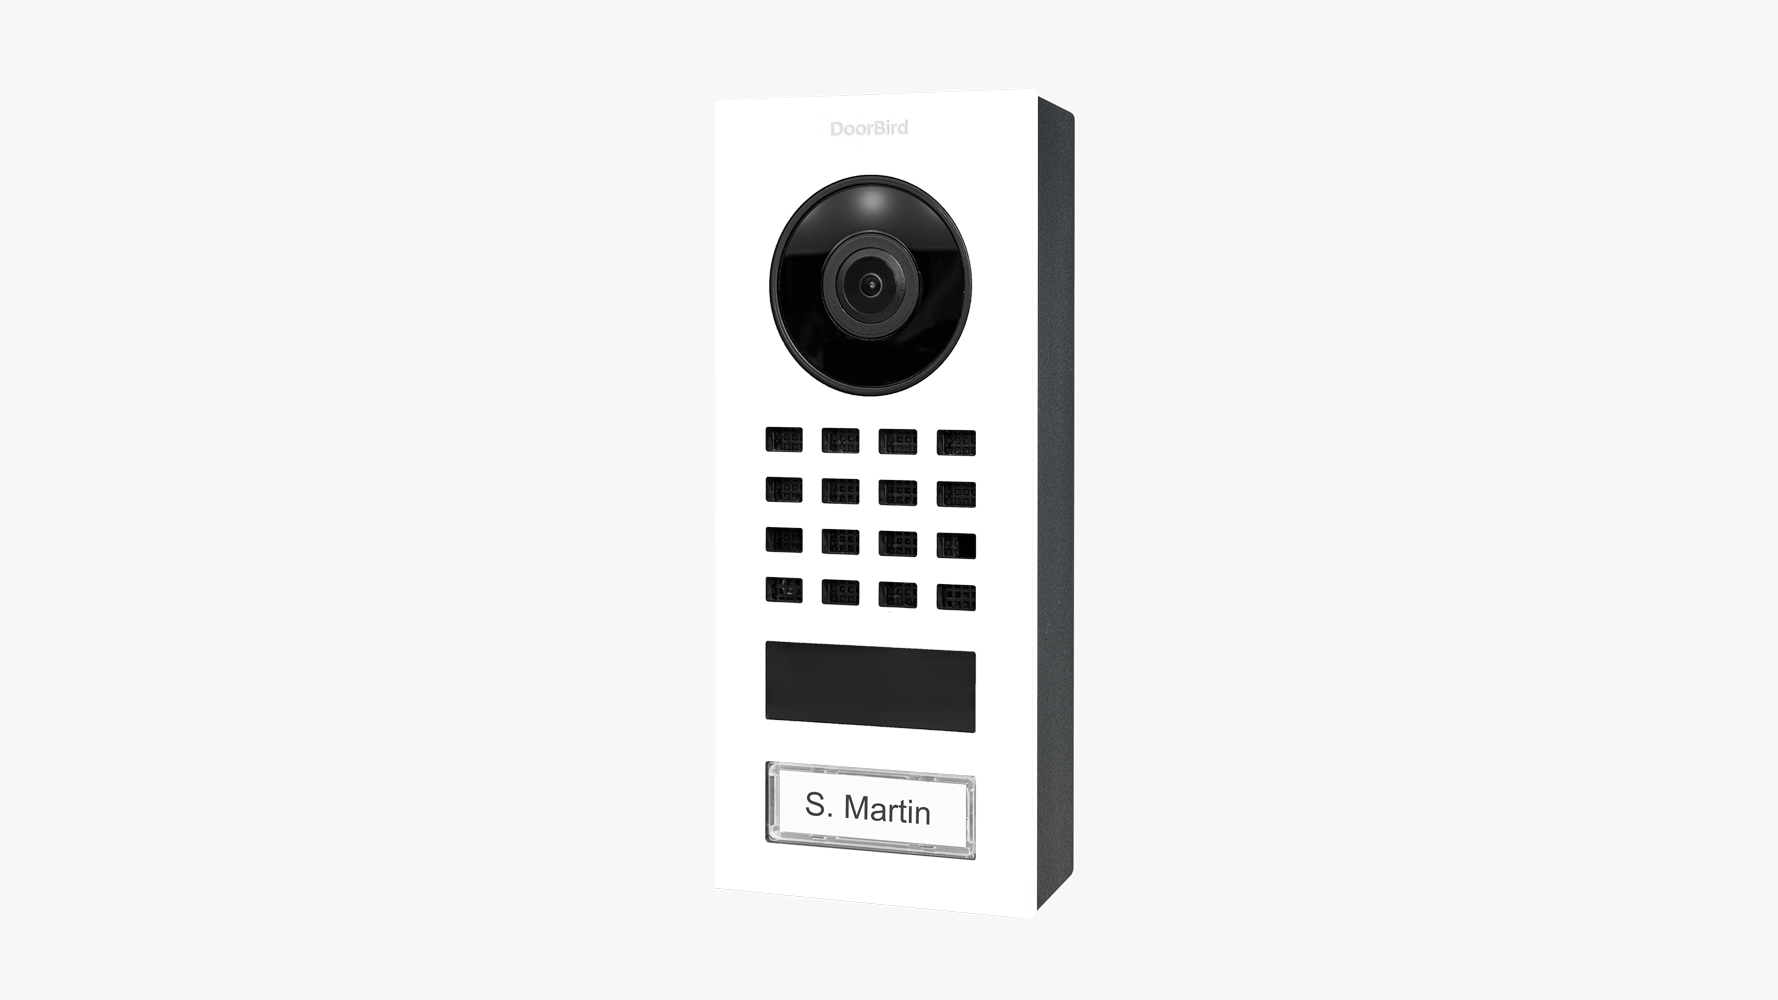 Doorbird - Portier vidéo IP 2 boutons D2102V - Interphone connecté